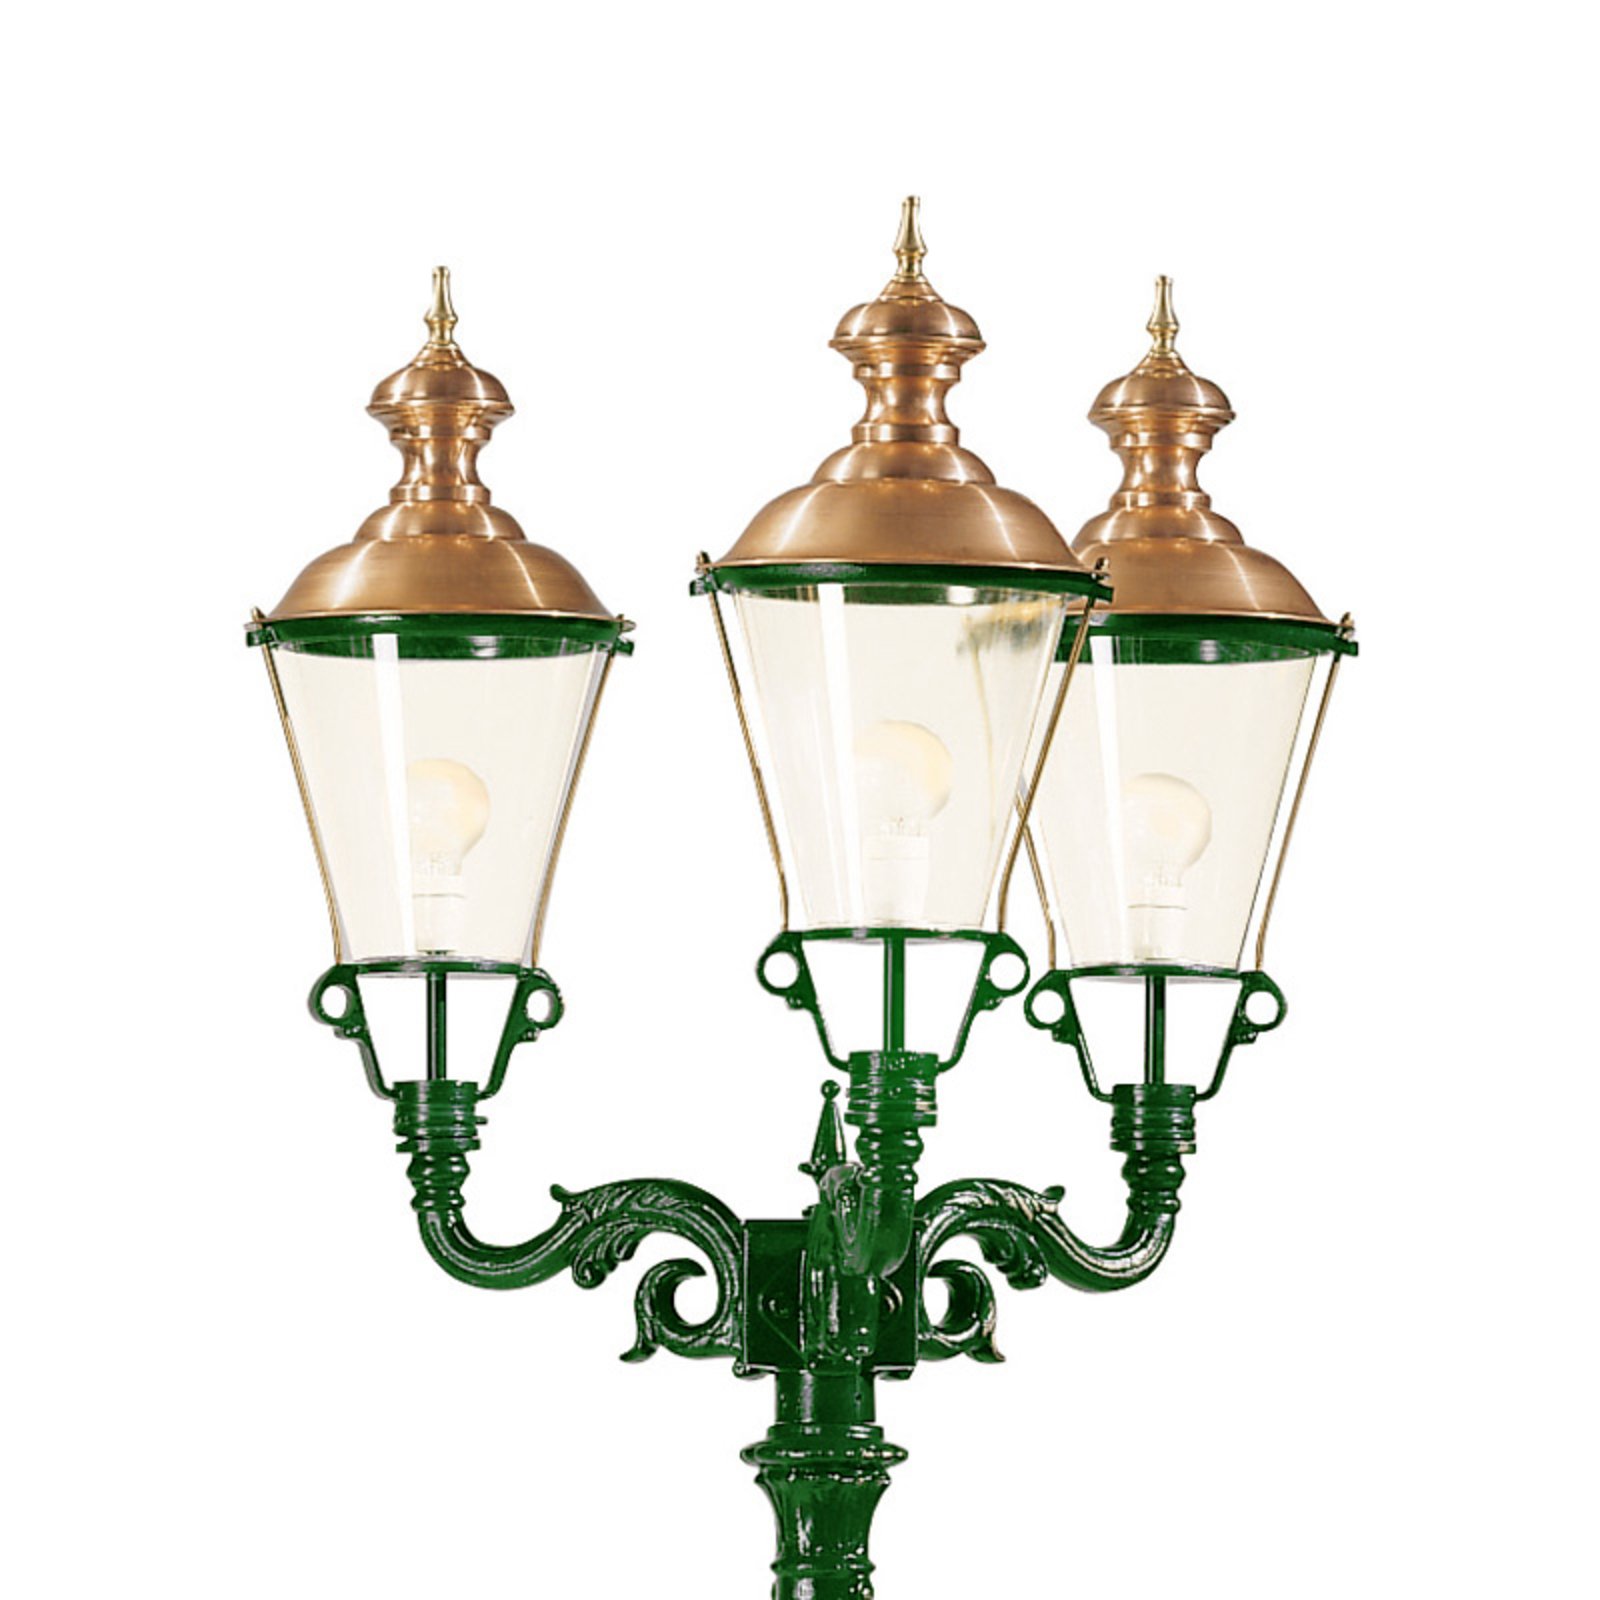 Three-bulb lamp post Parijs, green